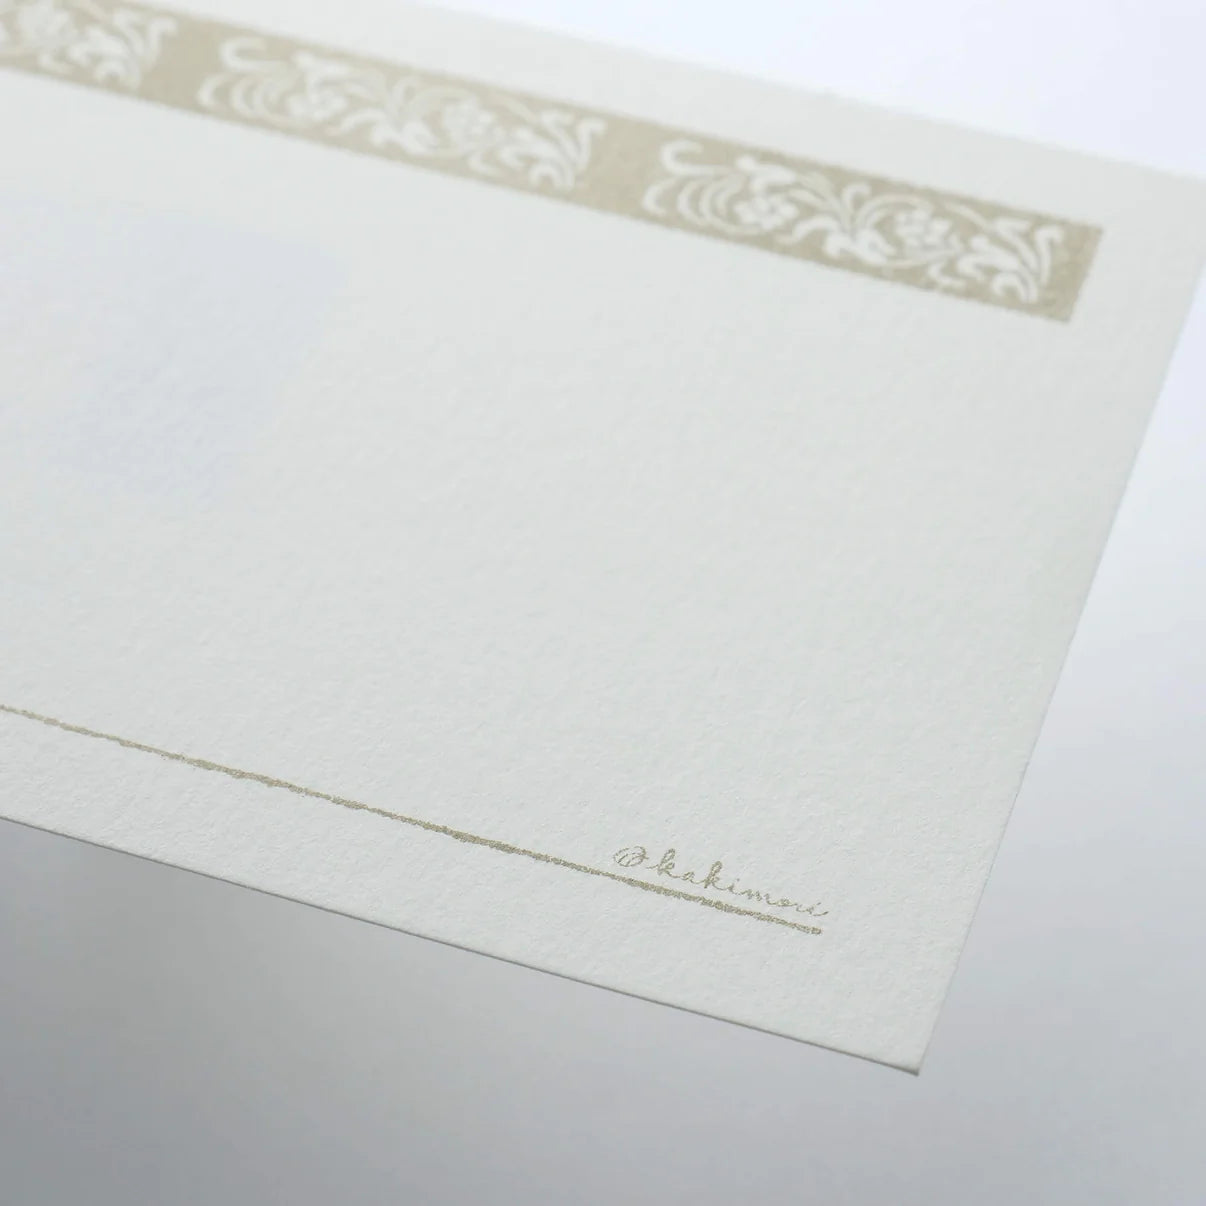 Set of Note Cards - Floral (KAKIMORI)